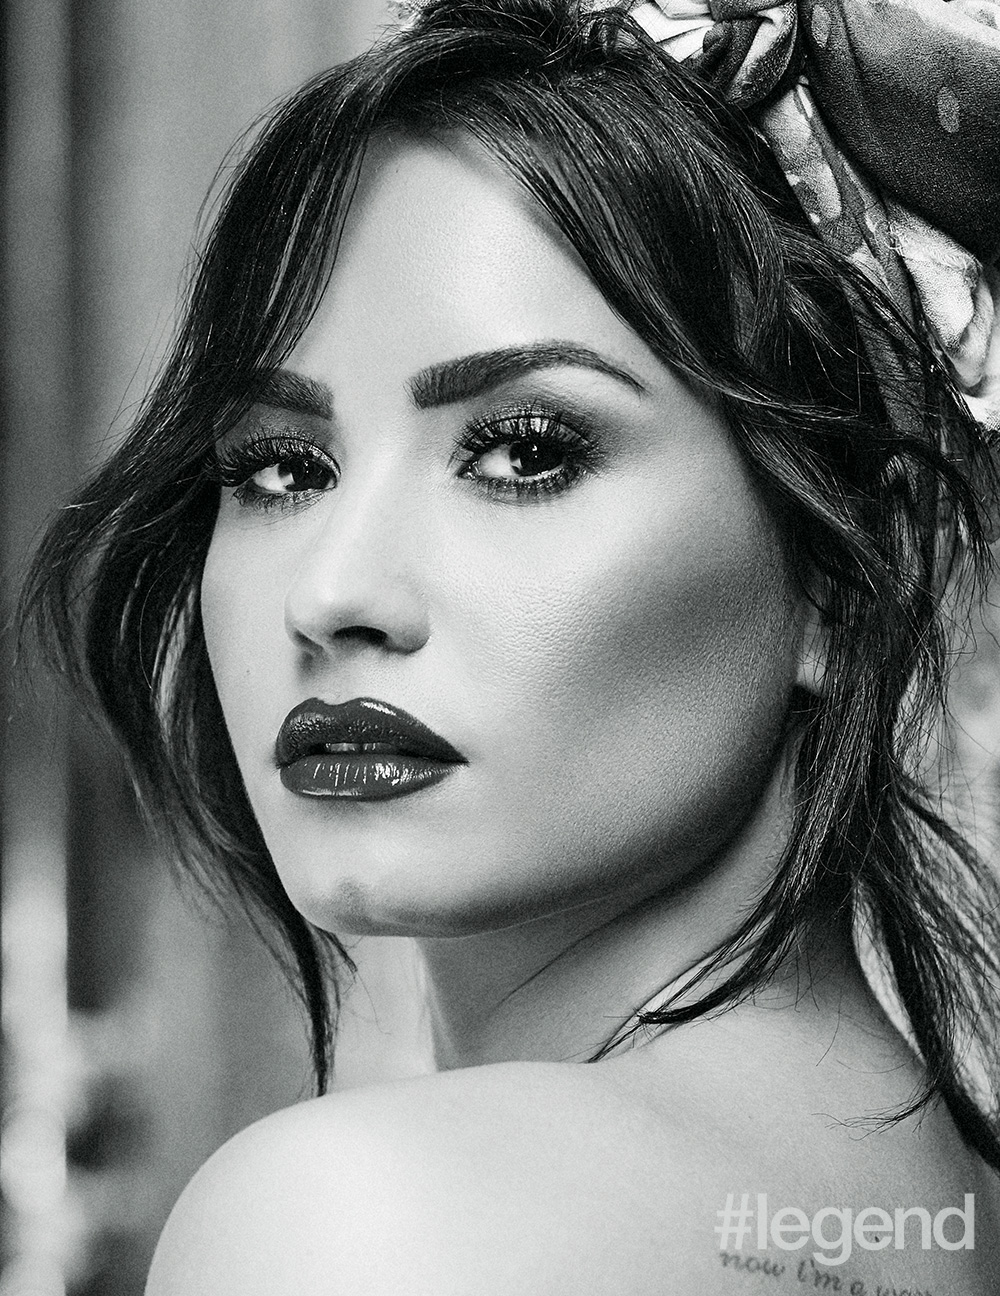 Demi Lovato Billboard Chart